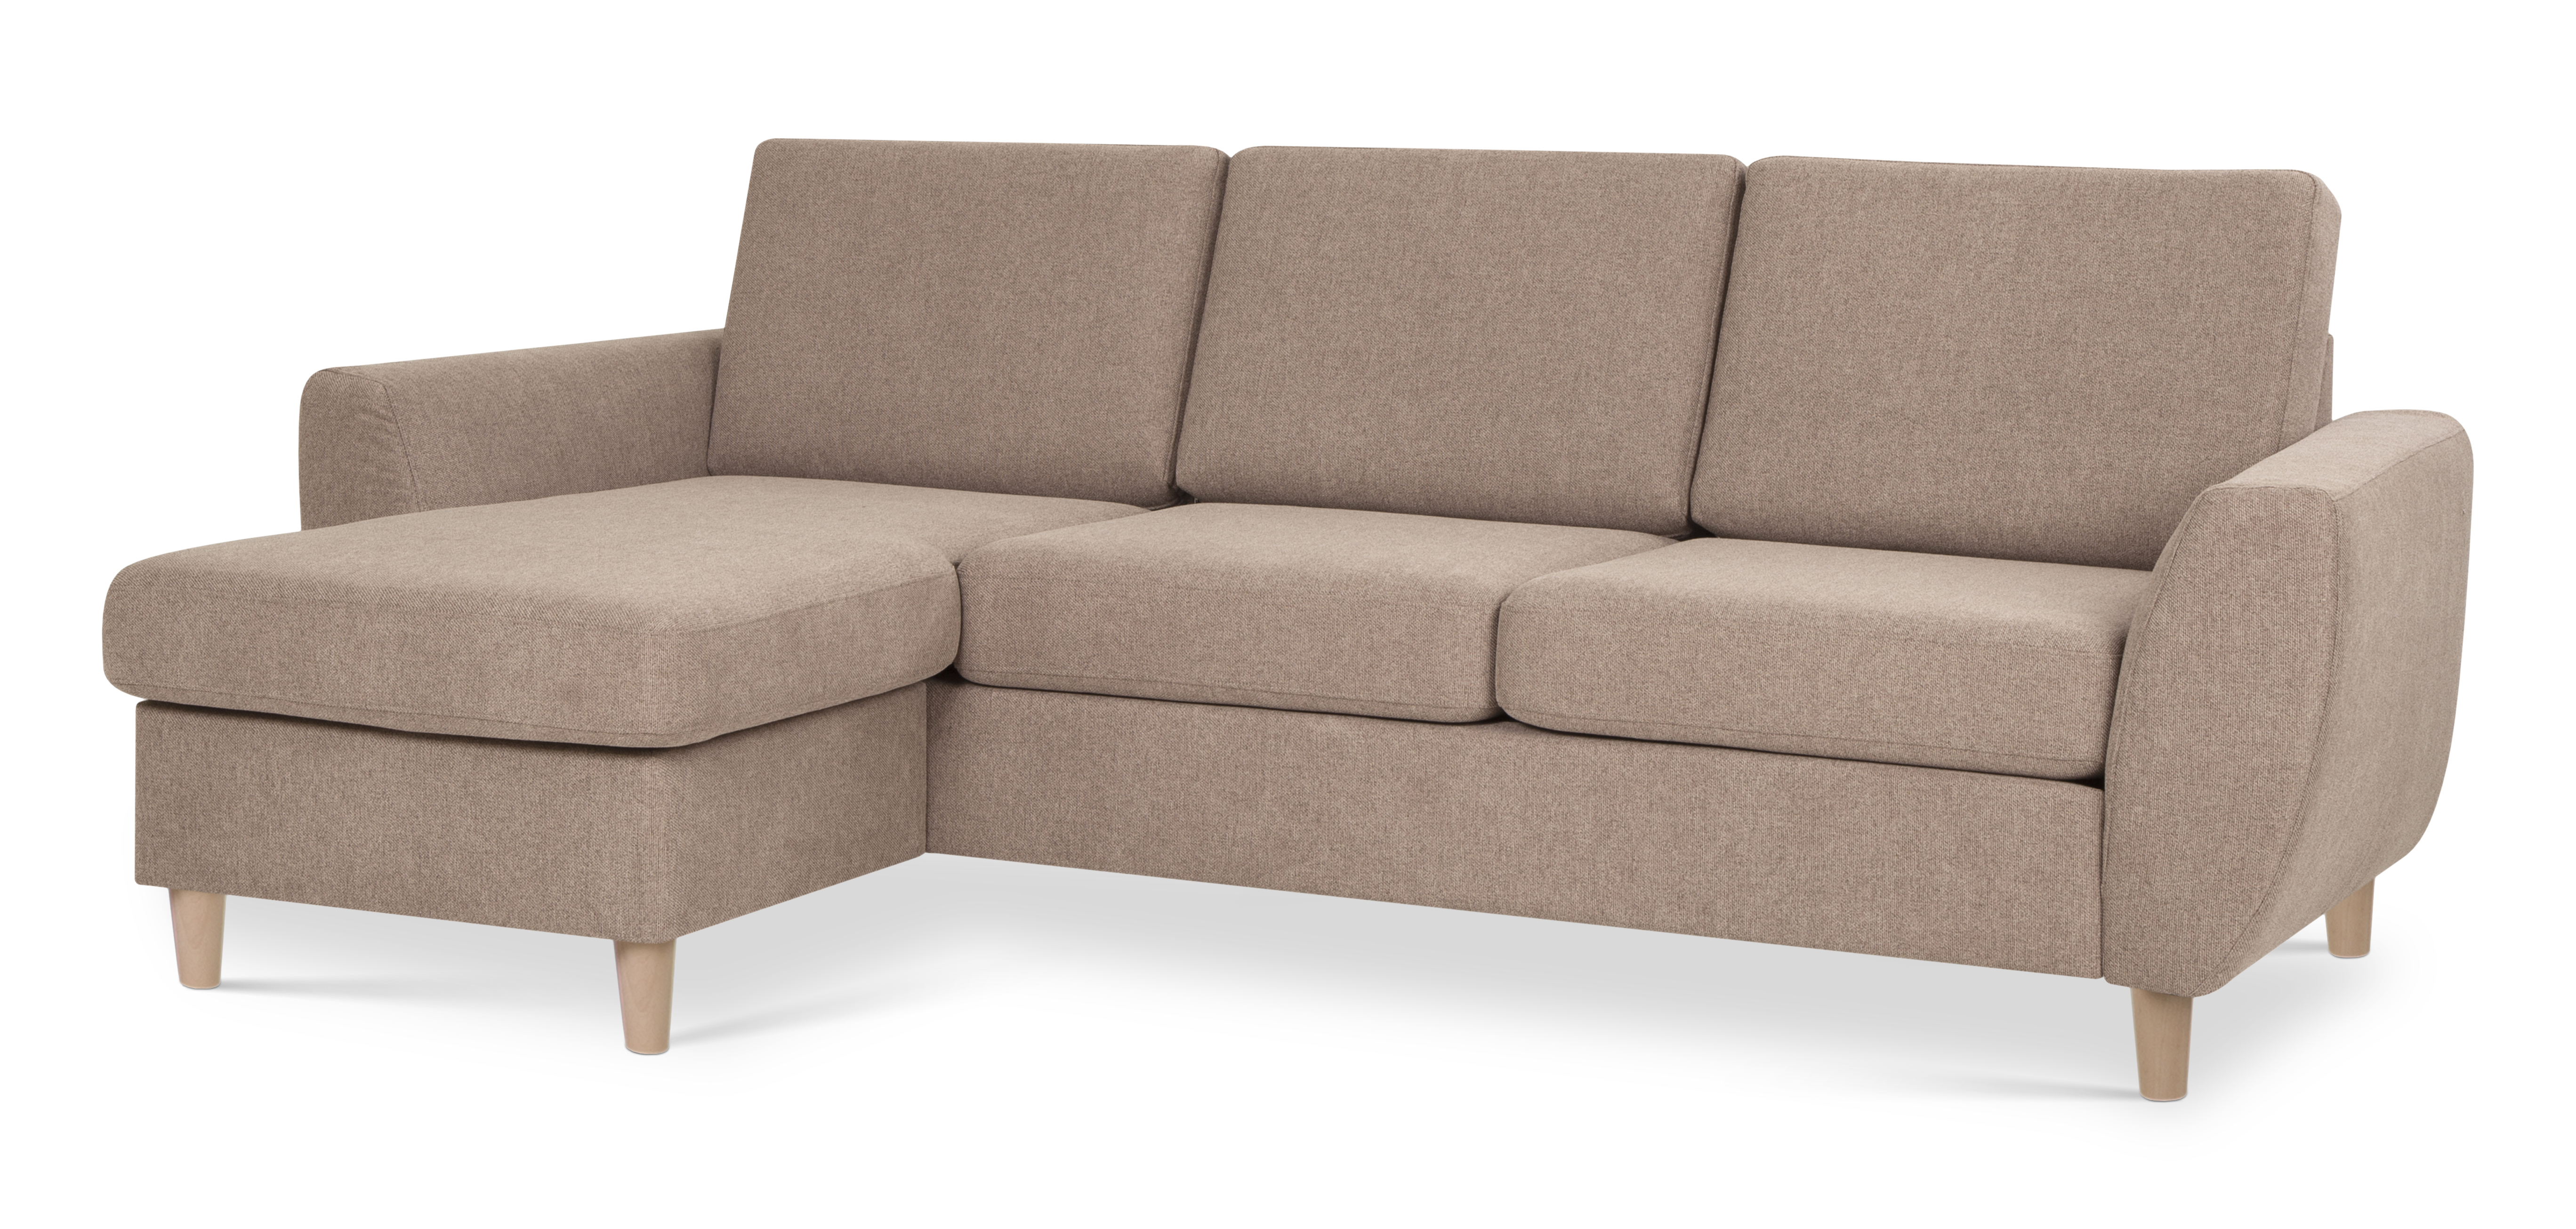 Wendy set 1 3D sofa, m. chaiselong - antelope beige polyester stof og natur træ